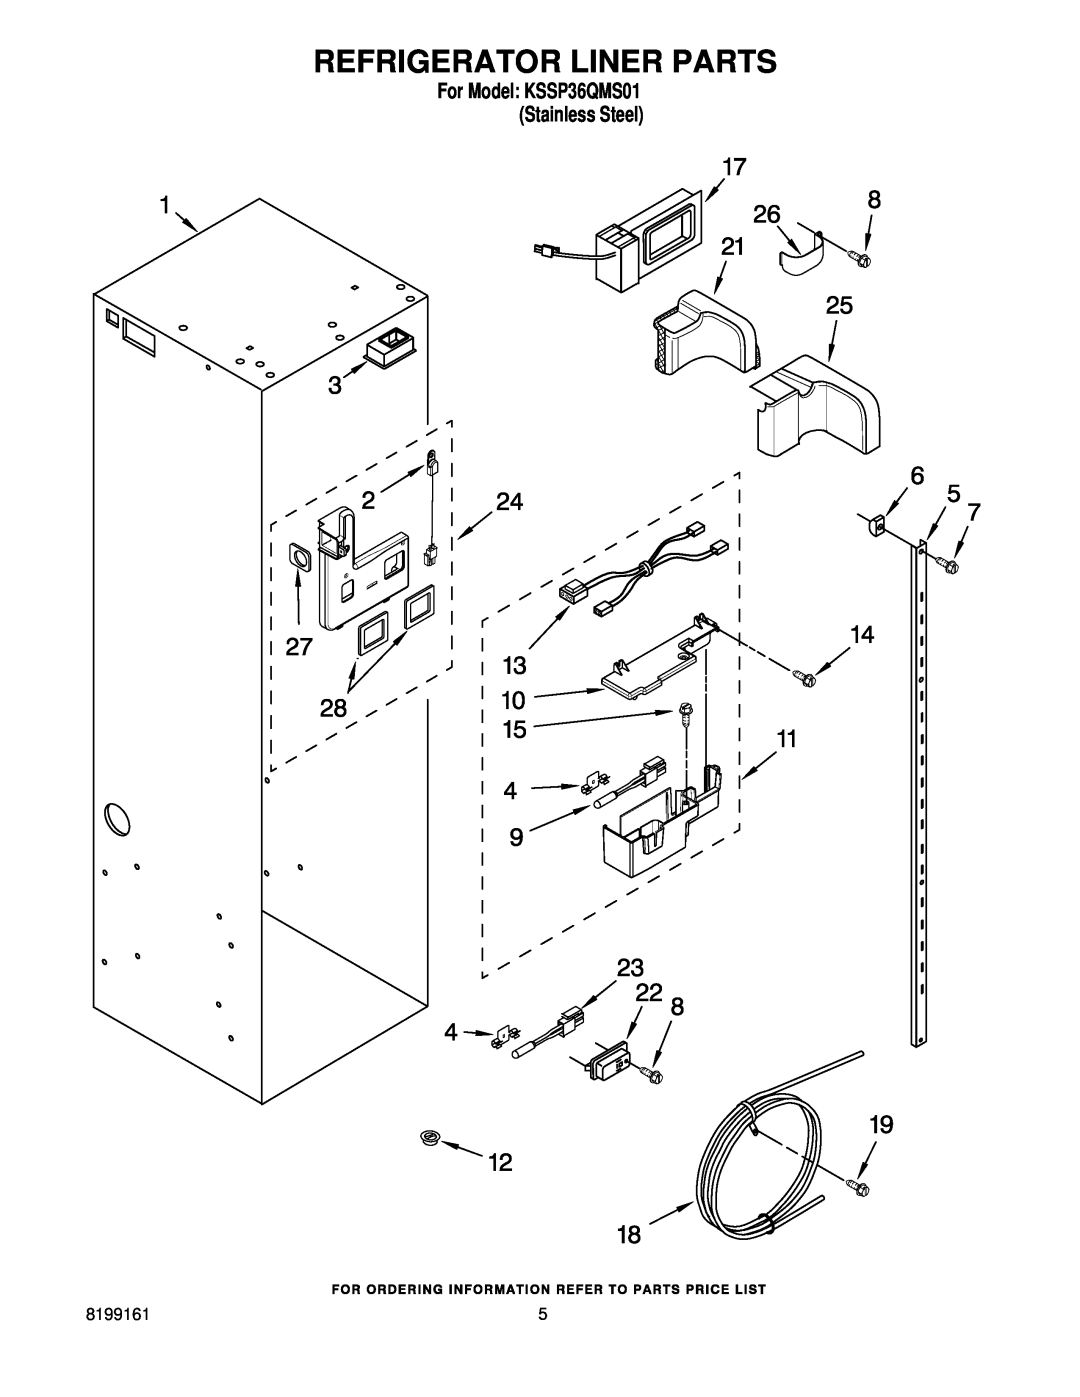 KitchenAid manual Refrigerator Liner Parts, For Model KSSP36QMS01 Stainless Steel 